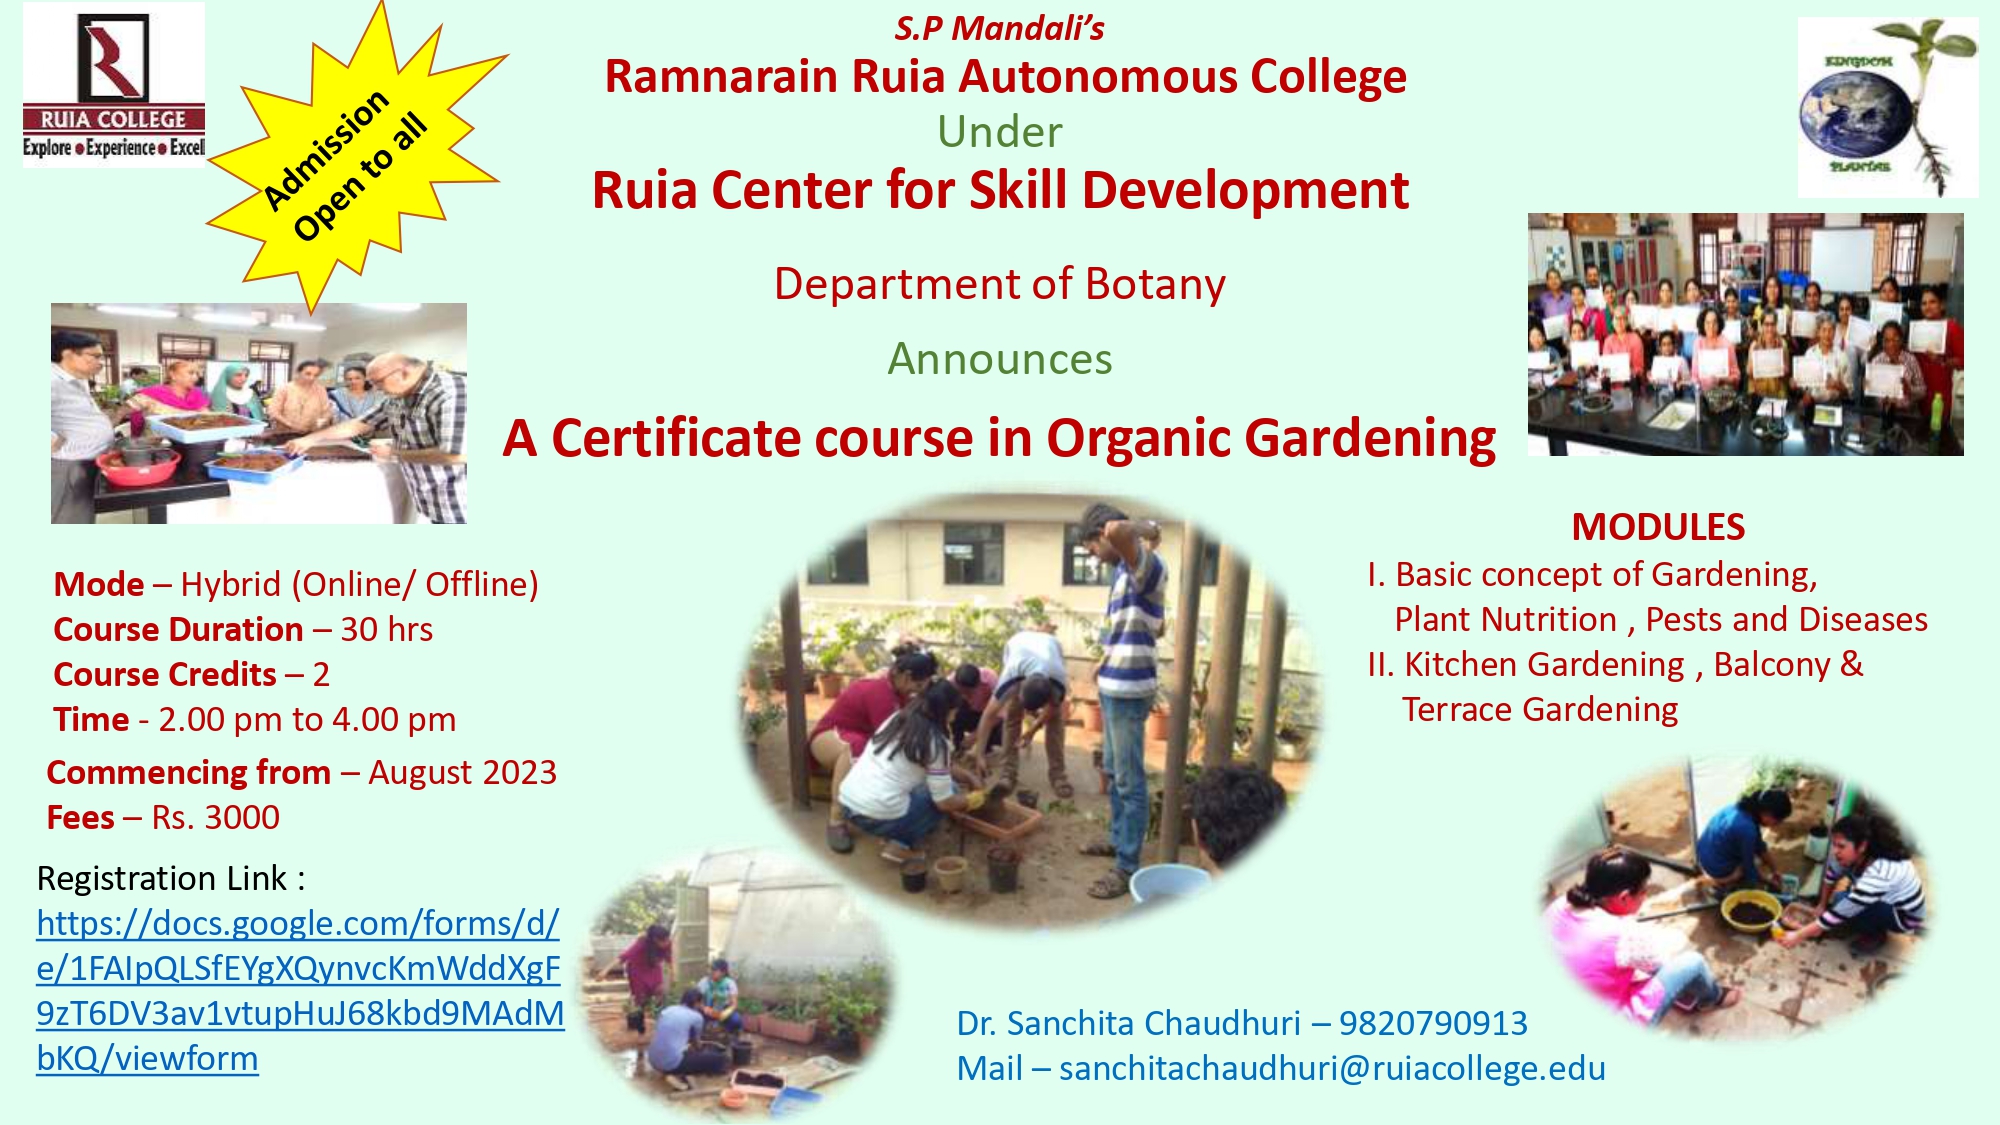 A Certificate course in Organic Gardening